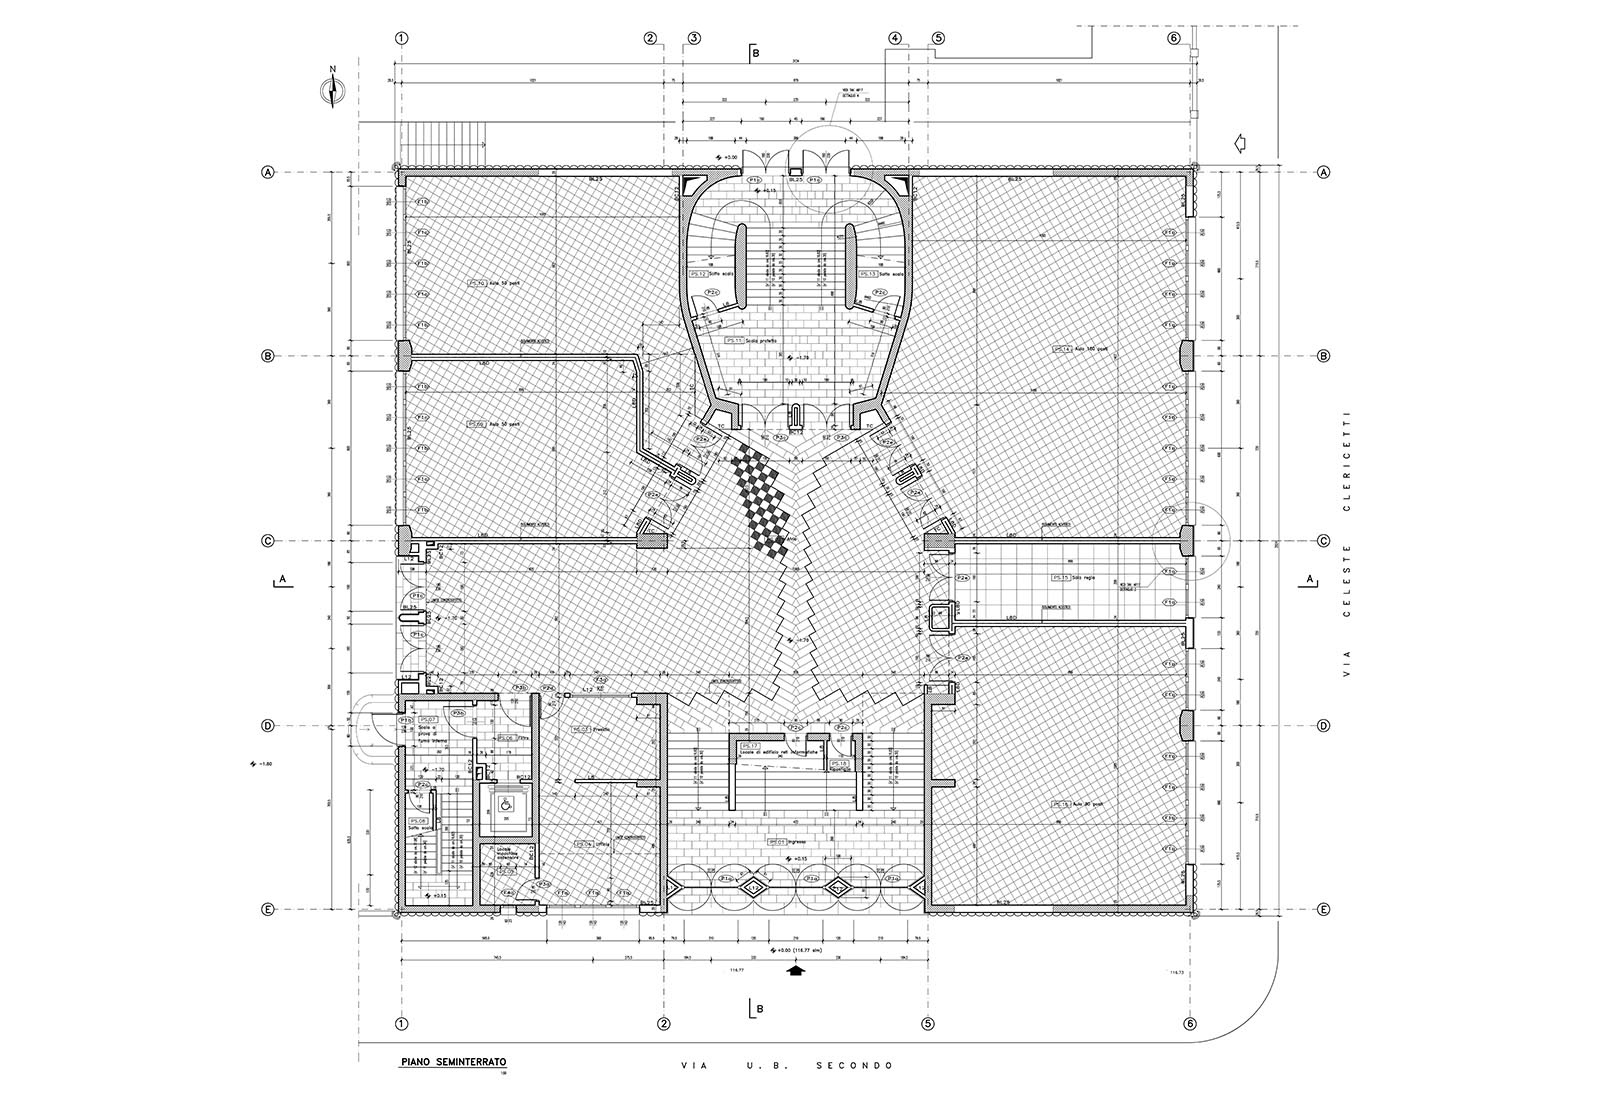 Building 25 Politecnico di Milano - Basement floor plan